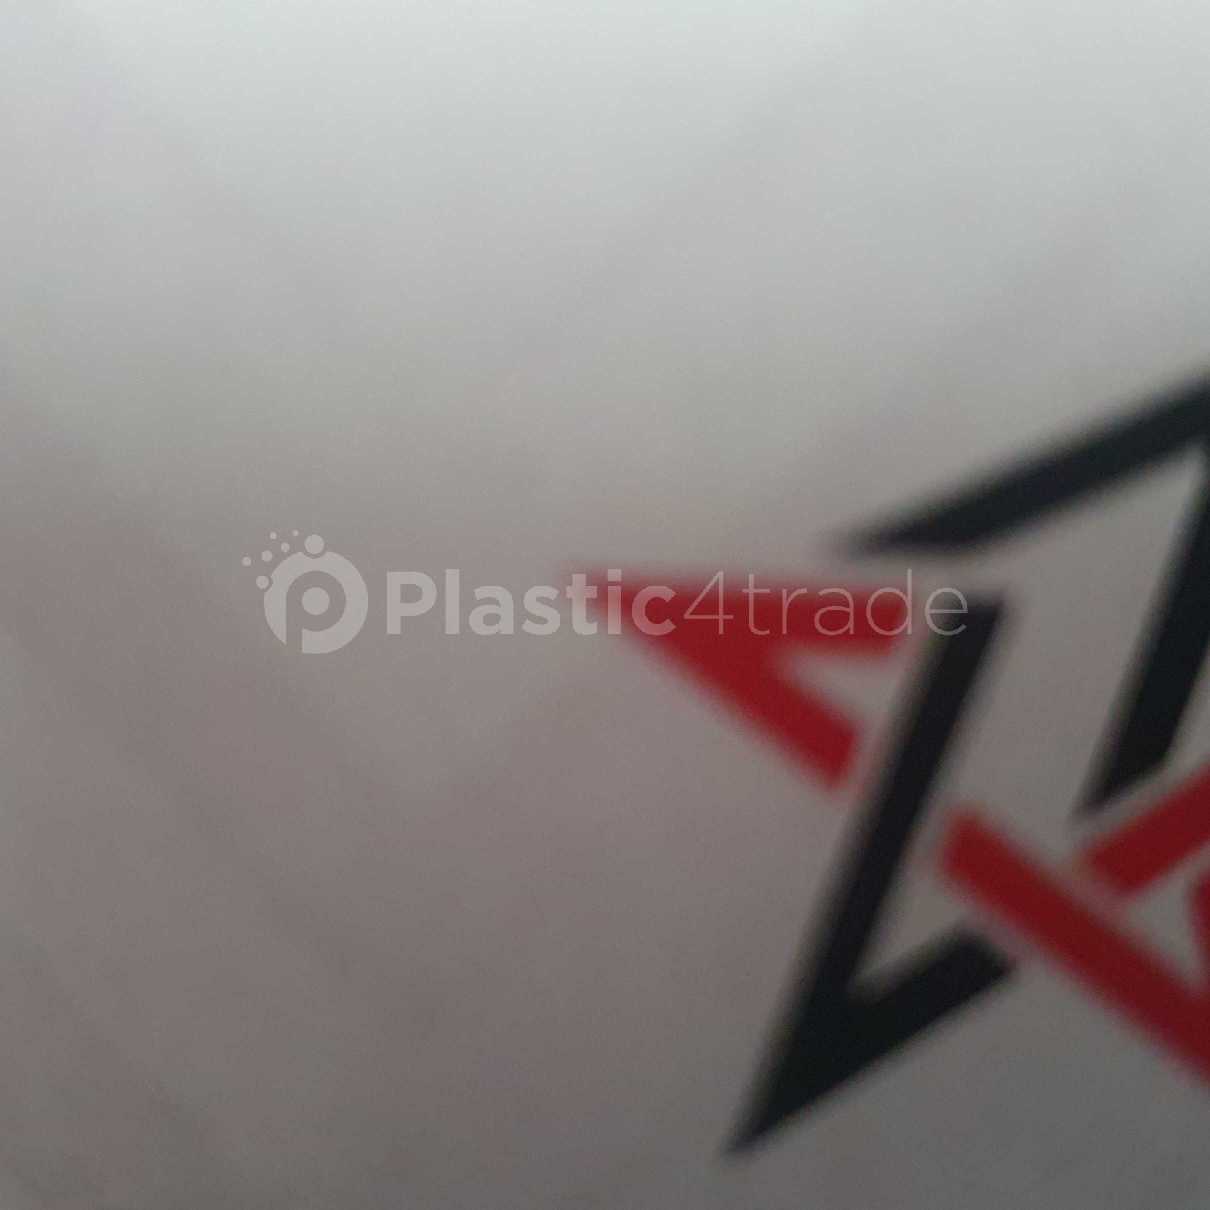 PP NON-WOVEN PVC Resin Extrusion gujarat india Plastic4trade